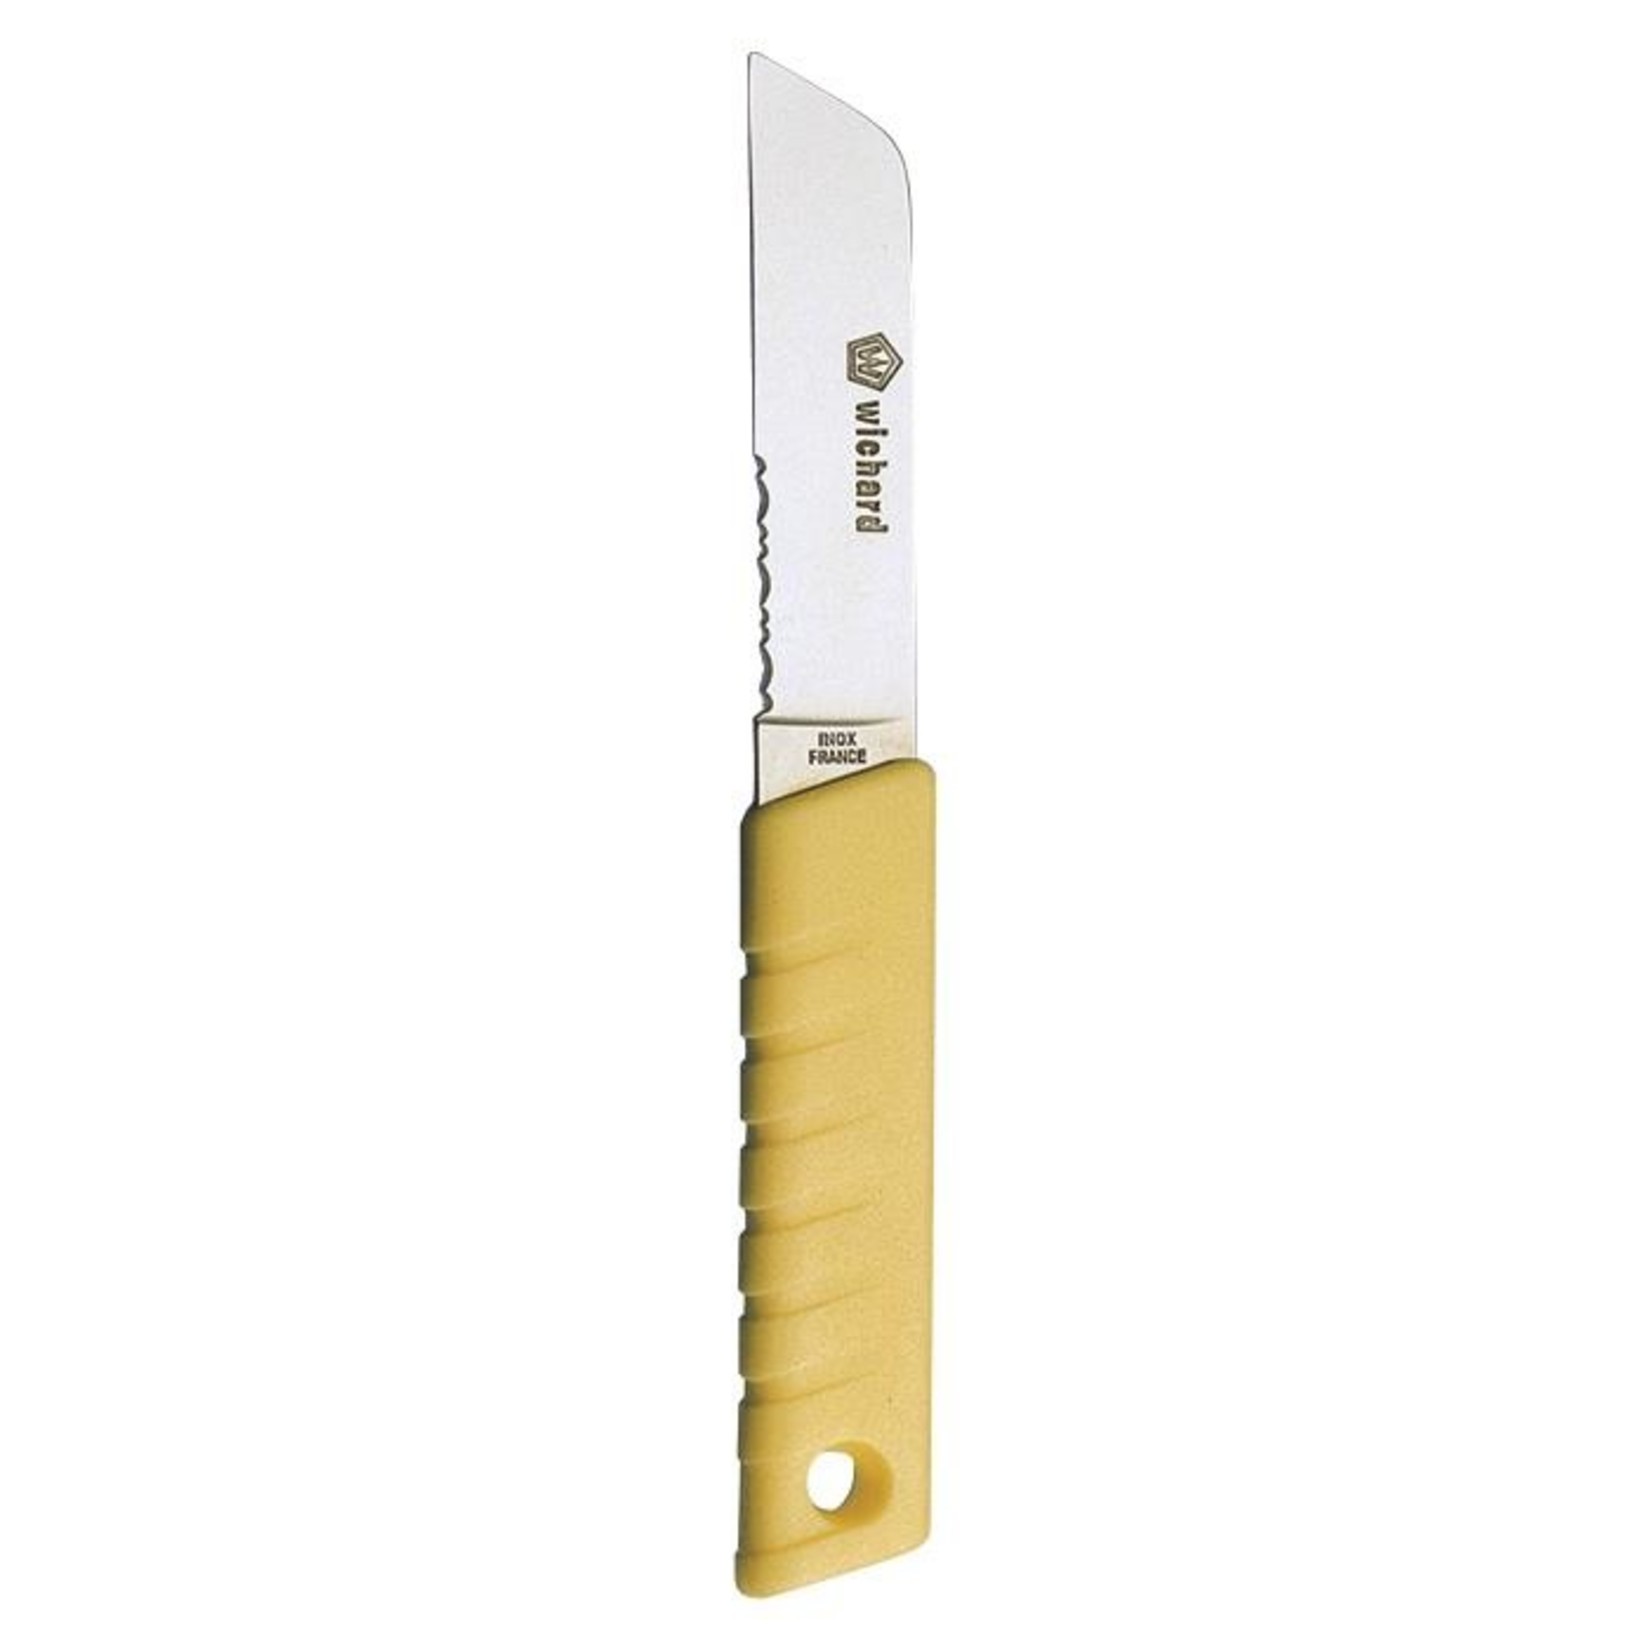 Wichard Fixed blade knife -  Length: 26 cm - Leather sheath